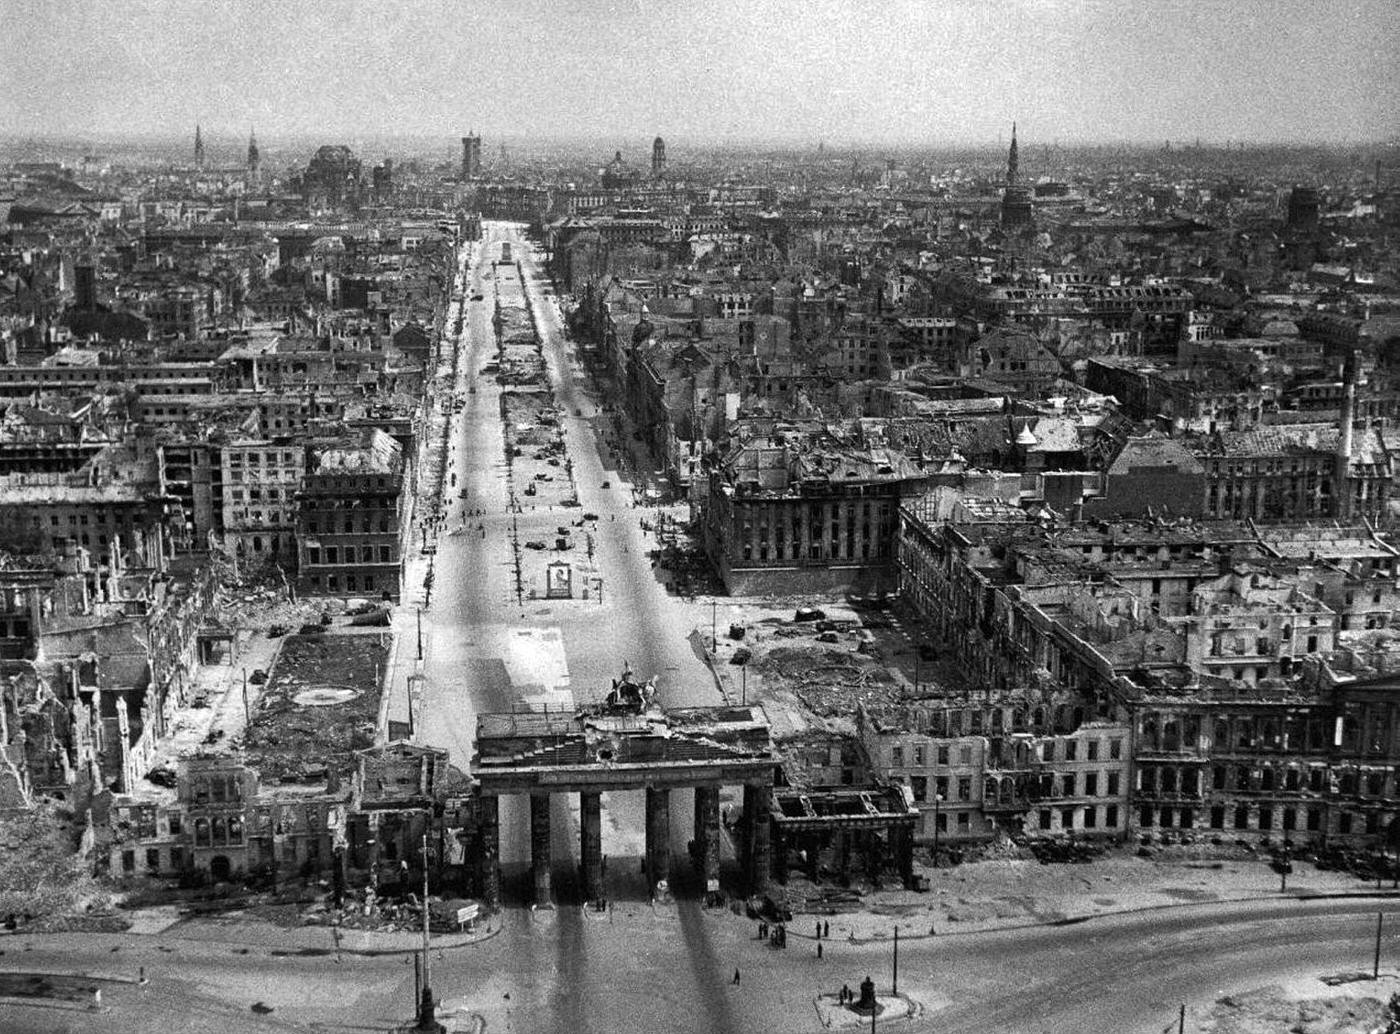 Berlin devastated at the end of World War II. Berlin, Germany, 1945.